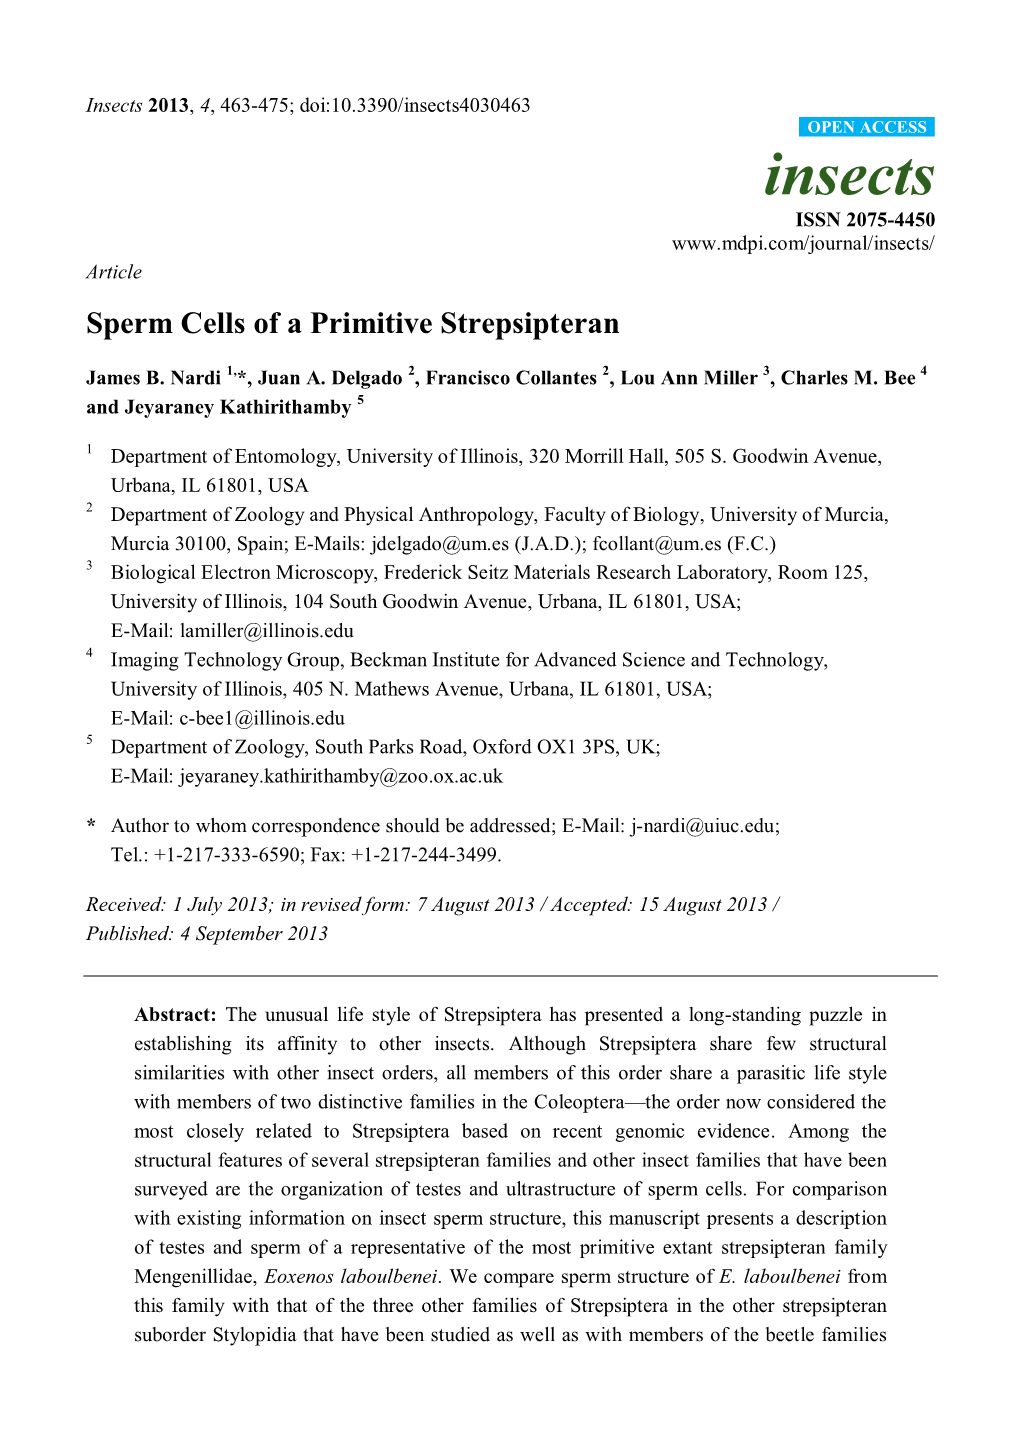 Sperm Cells of a Primitive Strepsipteran